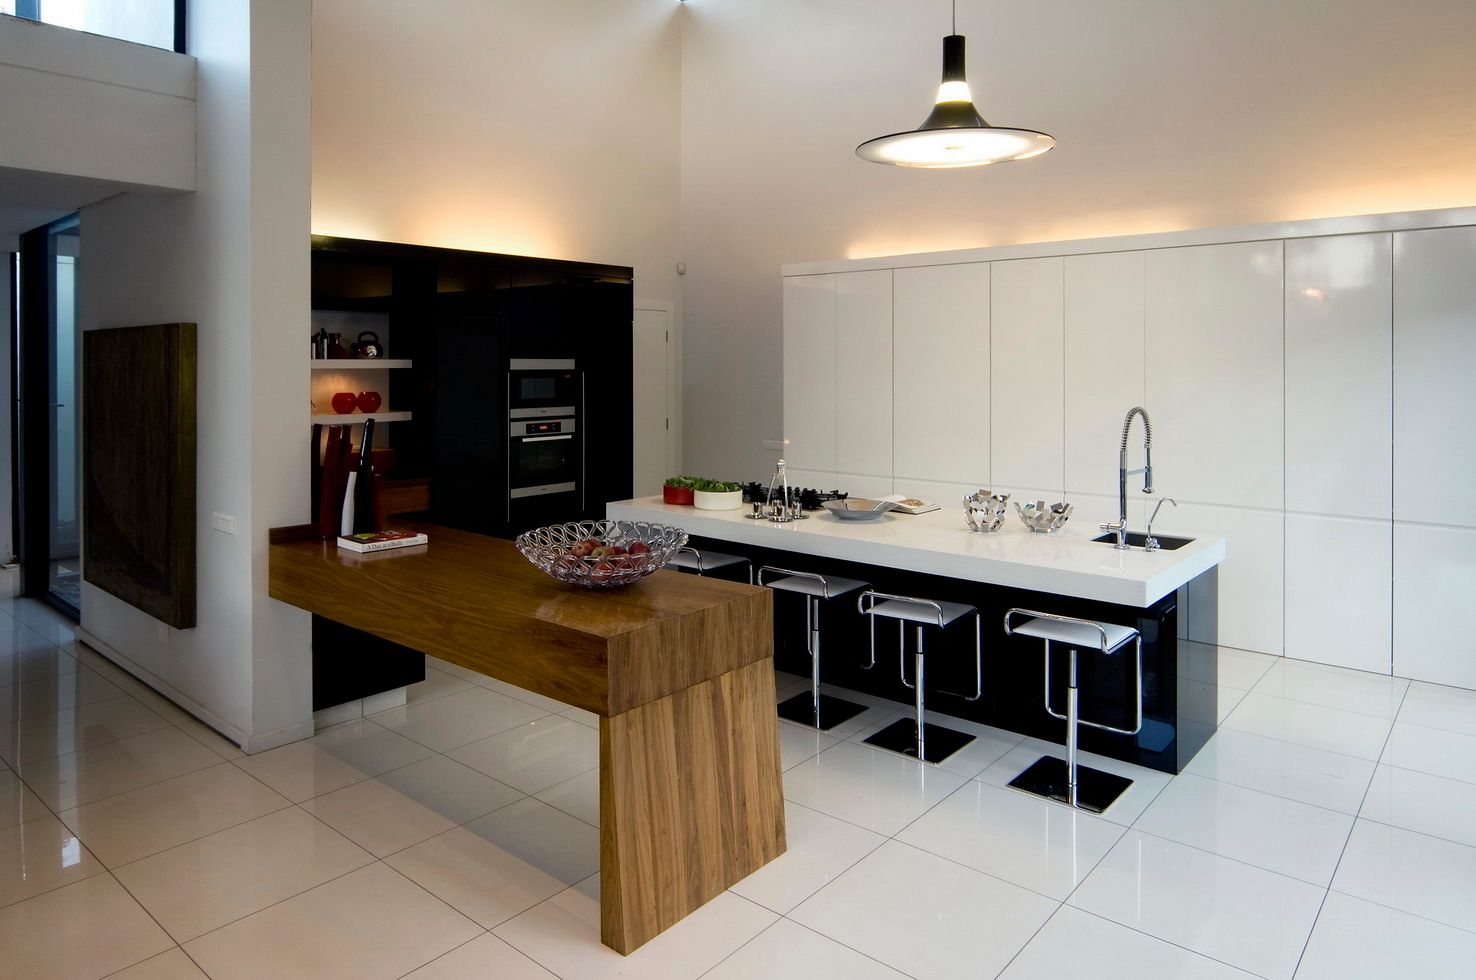 House Mosi: Renovations to create a single-storey home with an urban feel , Nico Van Der Meulen Architects Nico Van Der Meulen Architects Modern kitchen